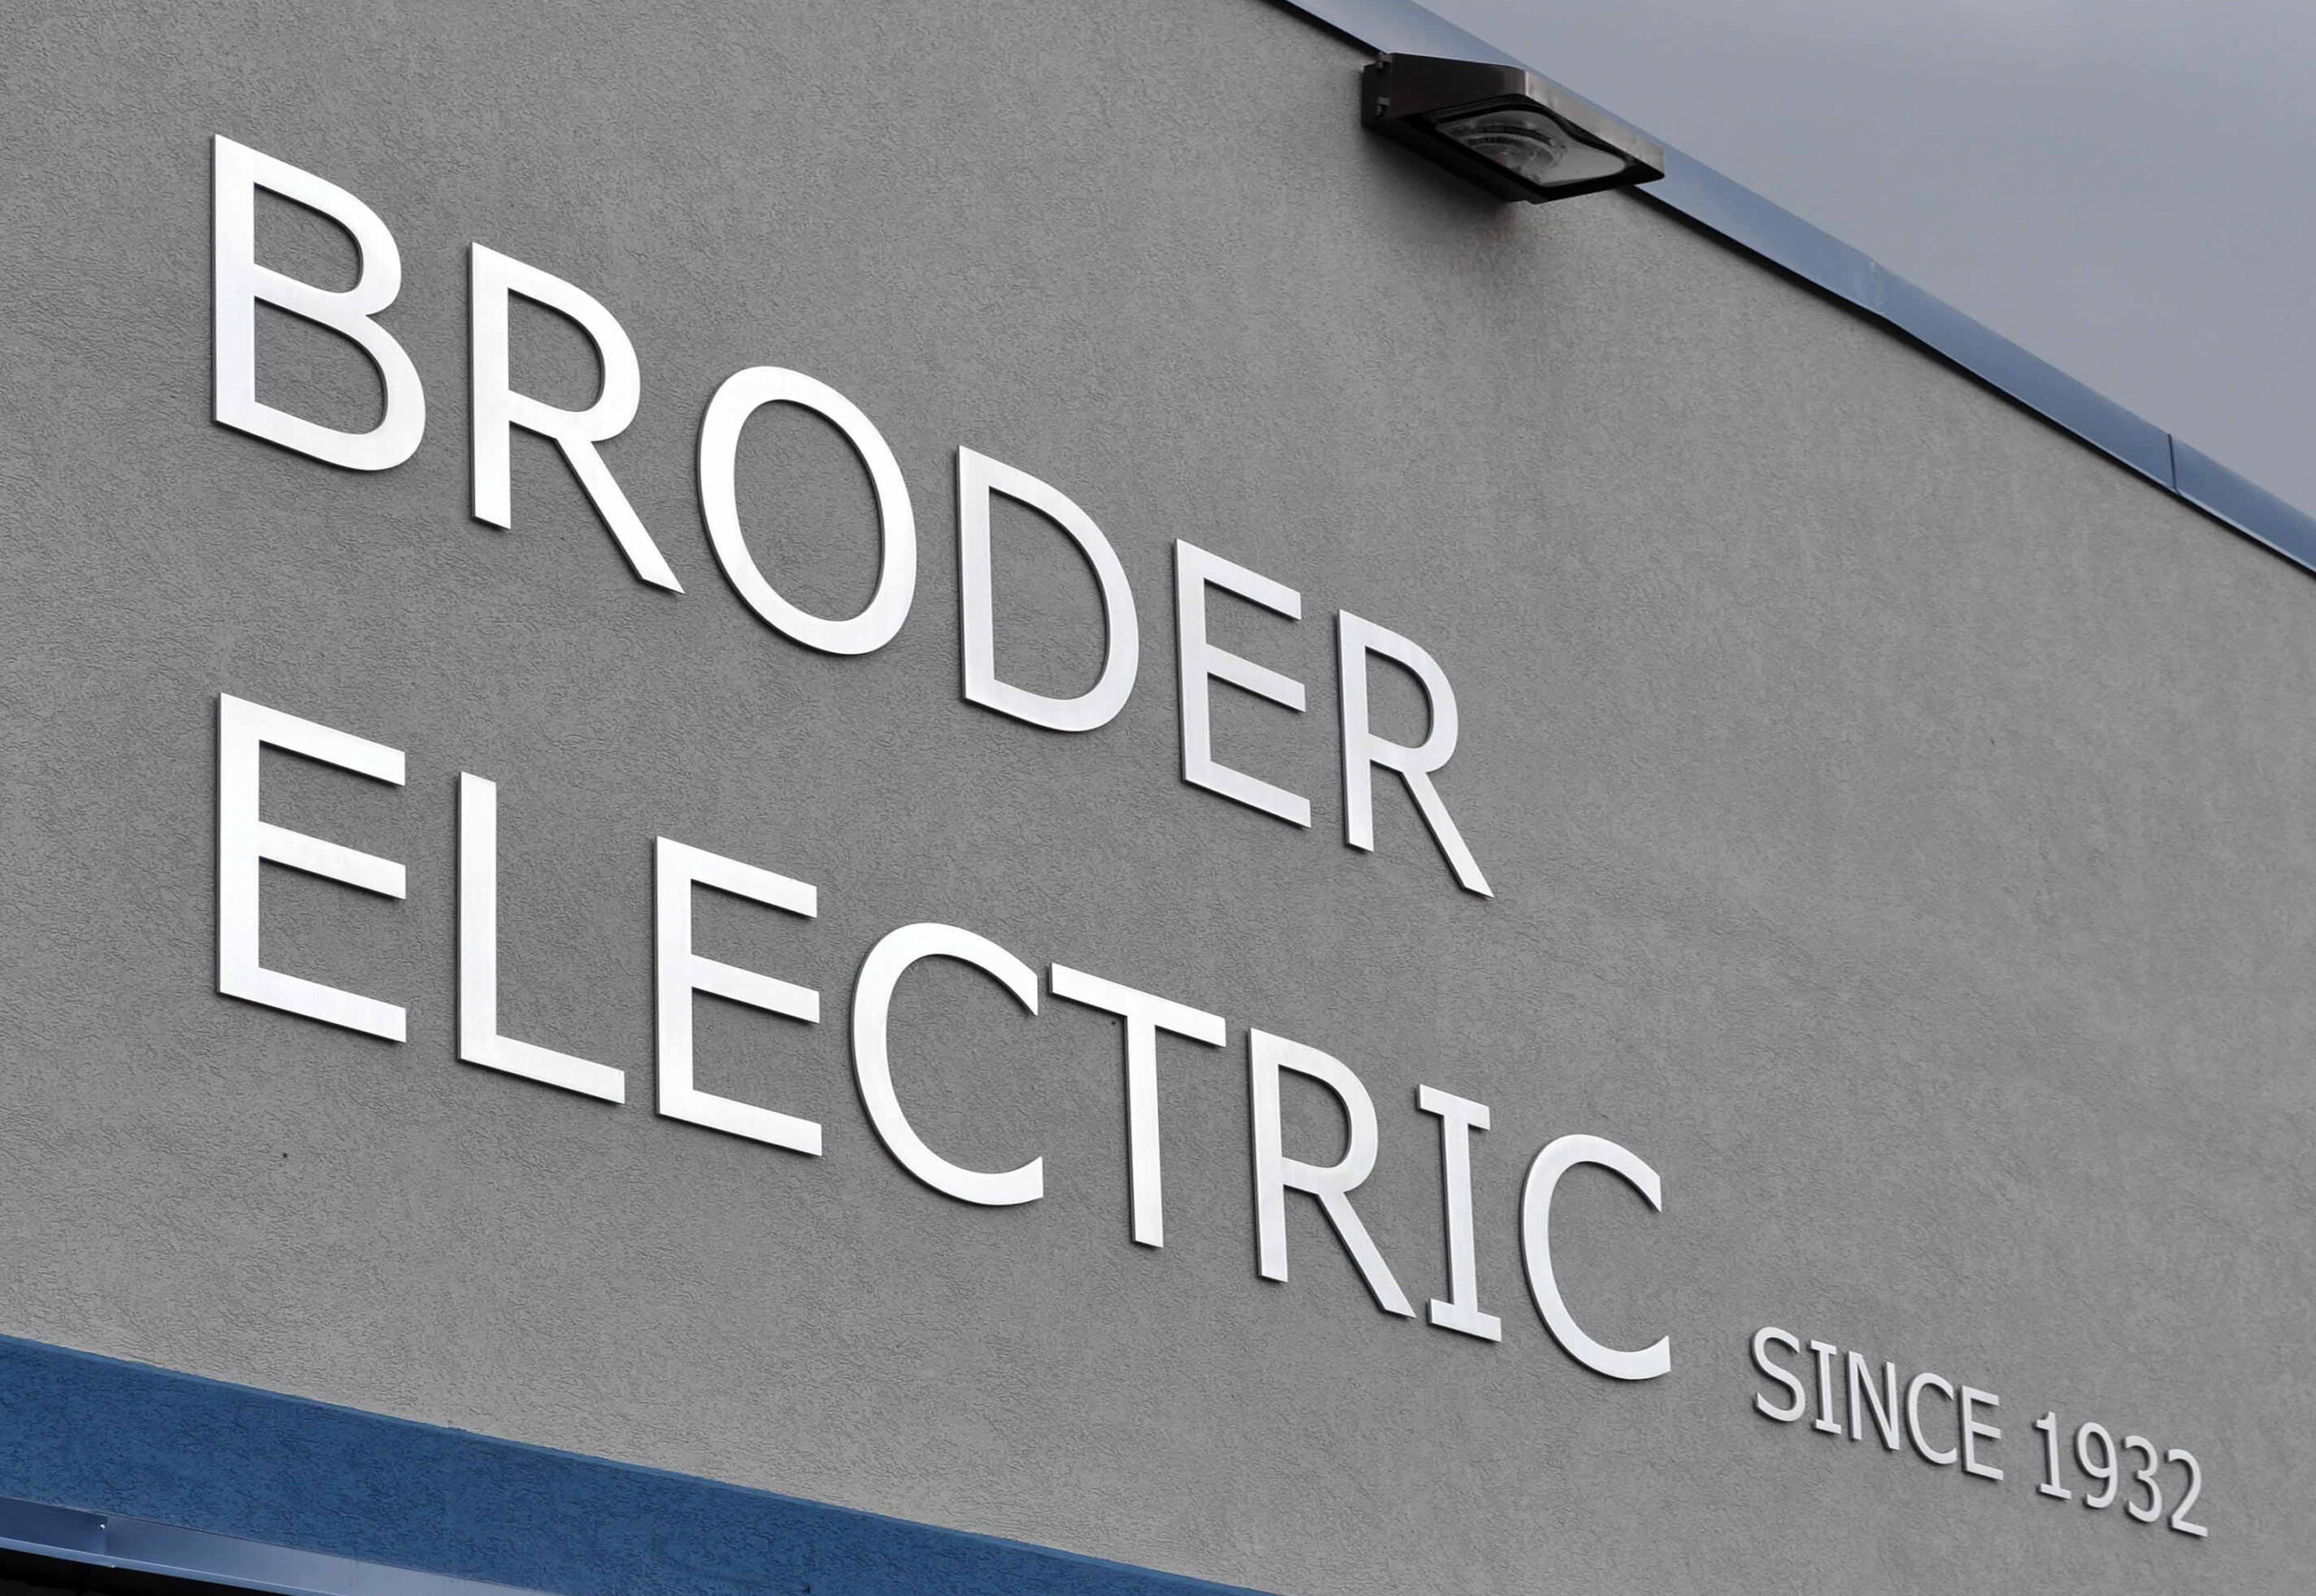 Broder Electric, Ottawa, exterior signage